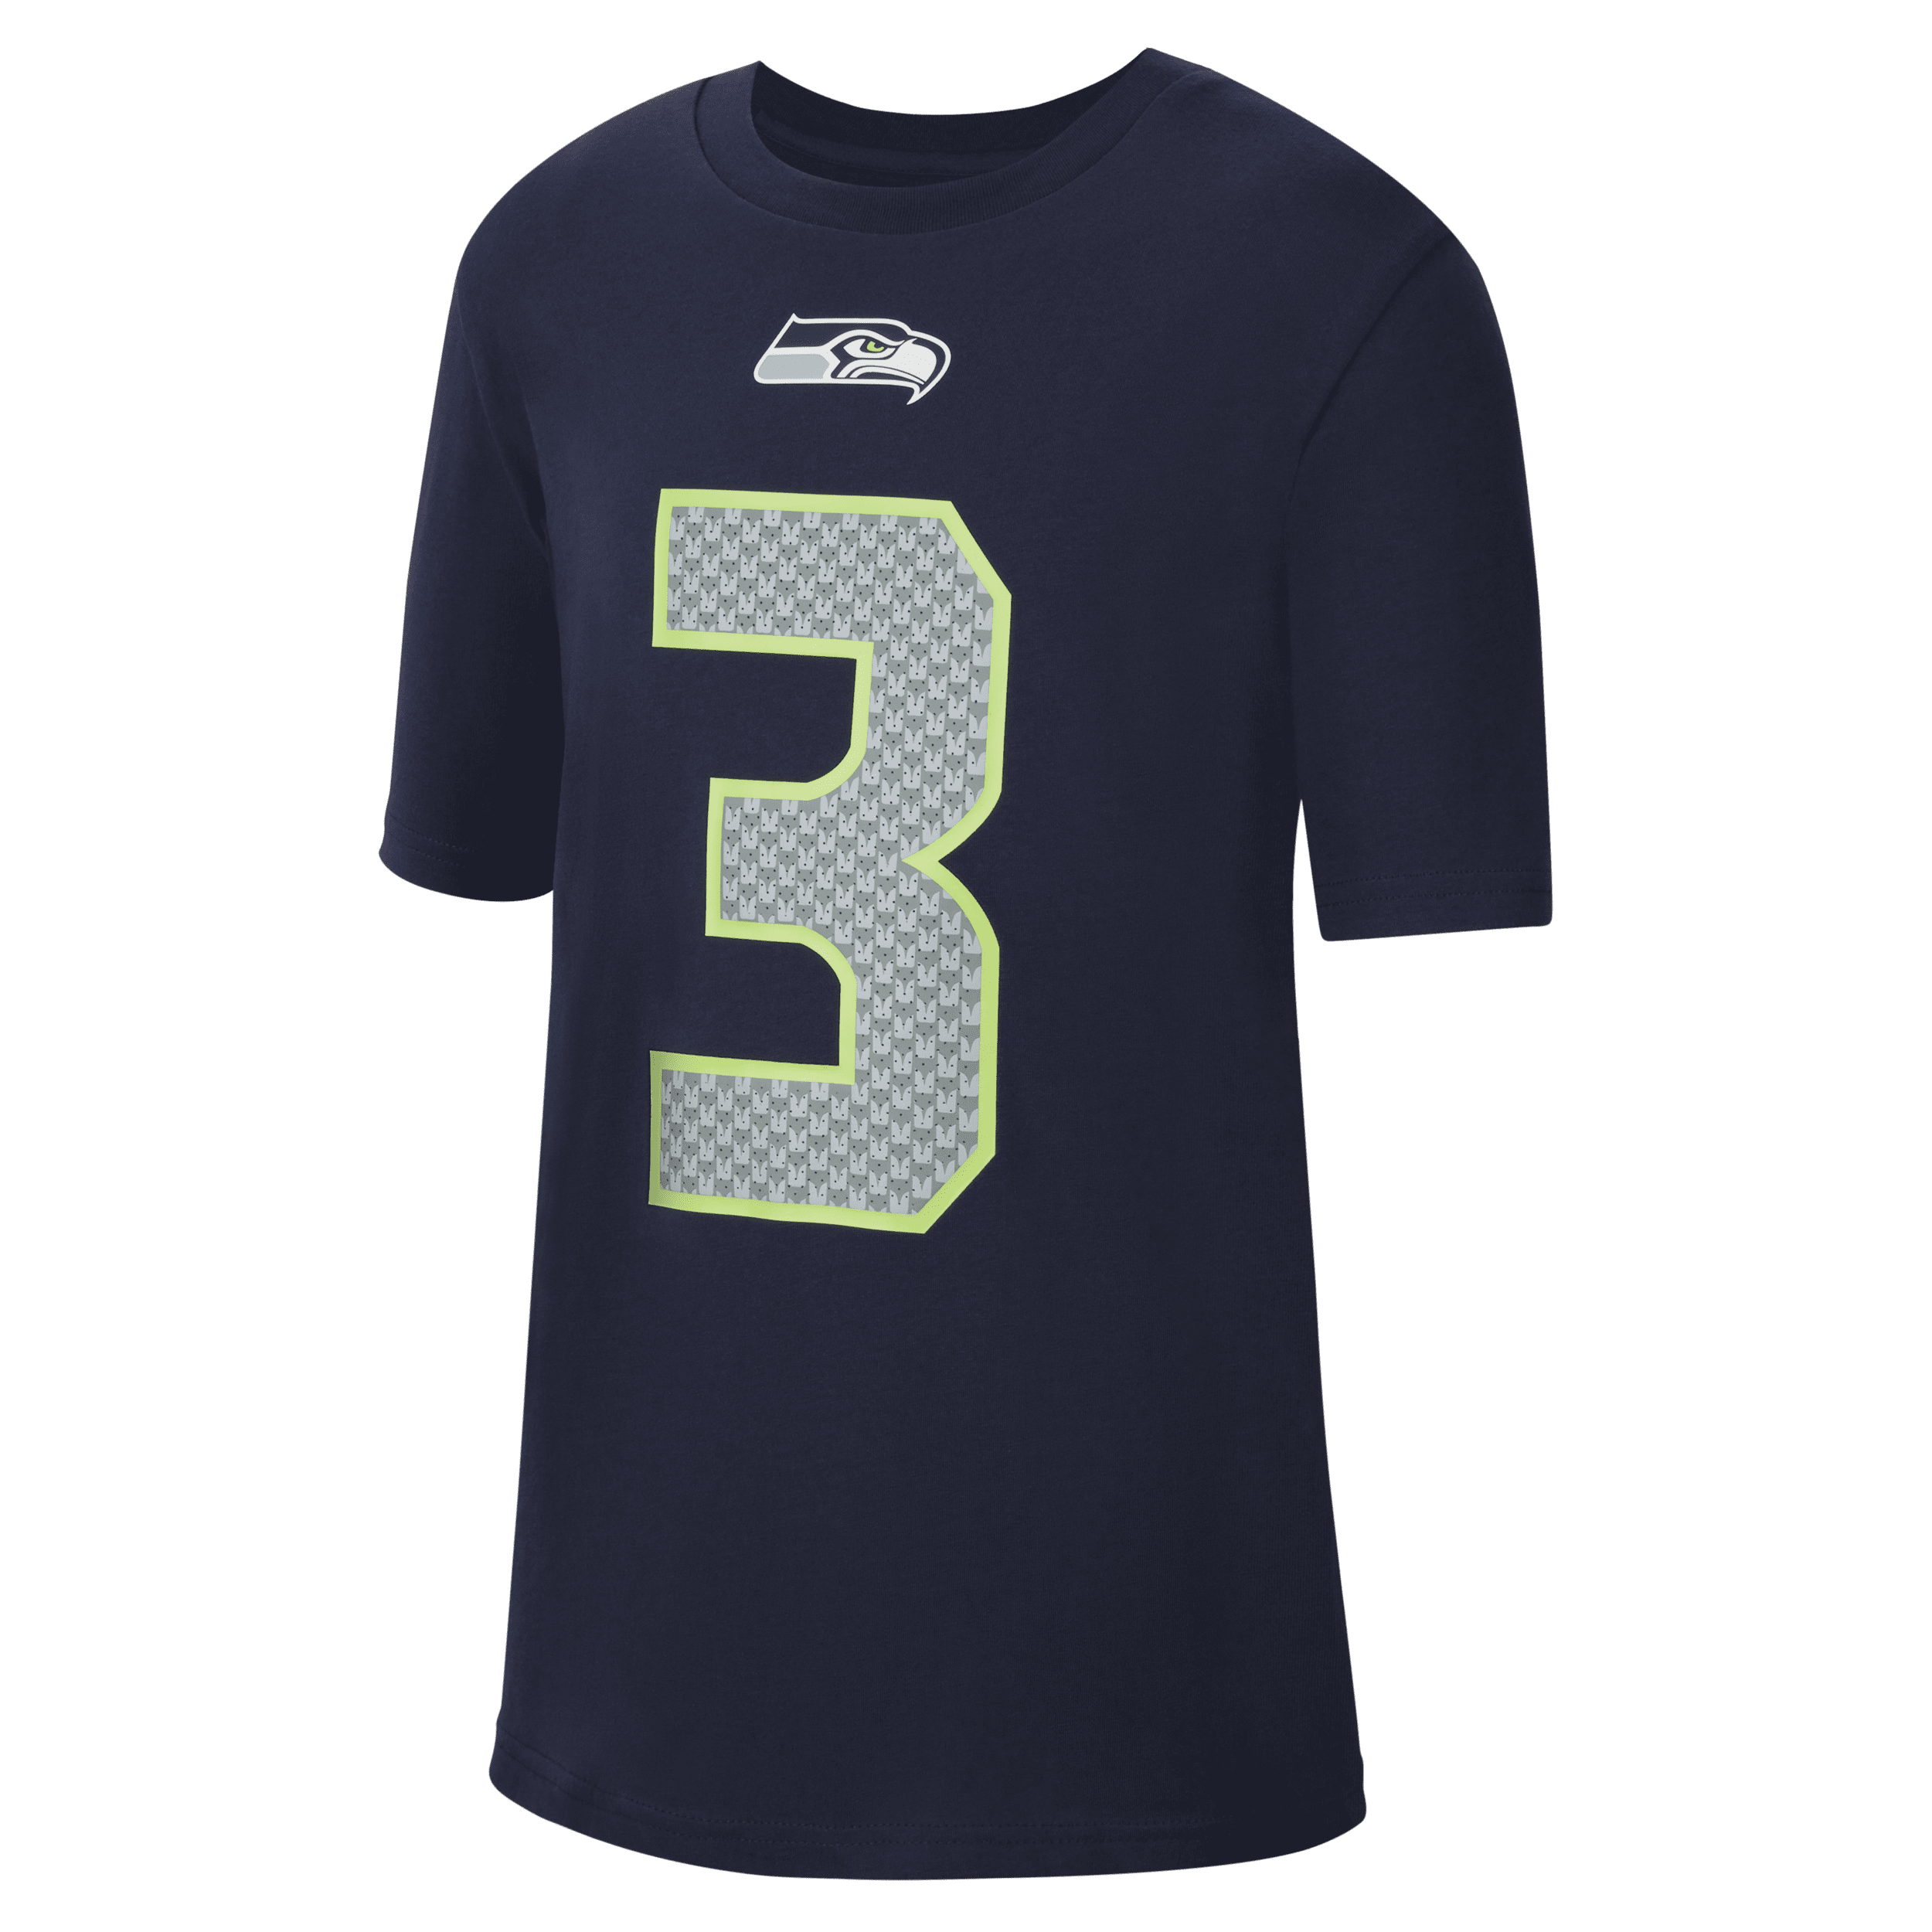 Nike (NFL Seattle Seahawks) Camiseta - Niño/a - Azul